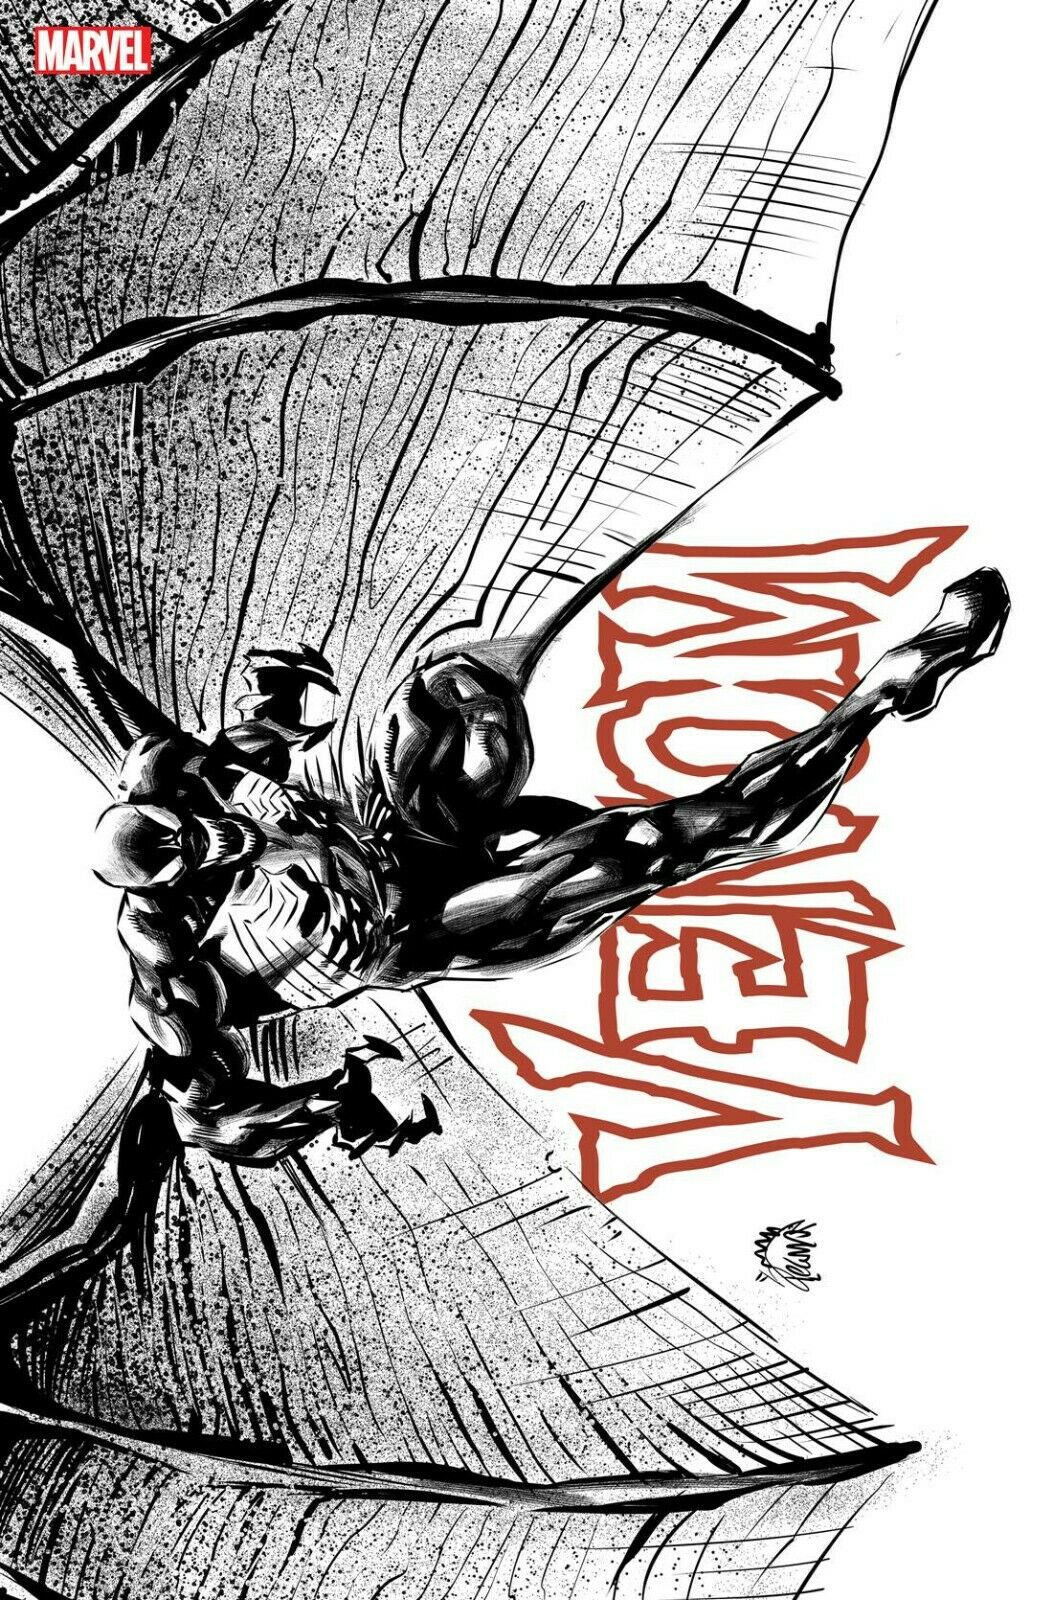 Venom 34 Mike Mayhew Todd McFarlane Homage Amazing Spider-man Virgin Variant DC Comics Marvel Comics X-Men Batman East Side Comics Virgin Exclusive cgc signed ss comics